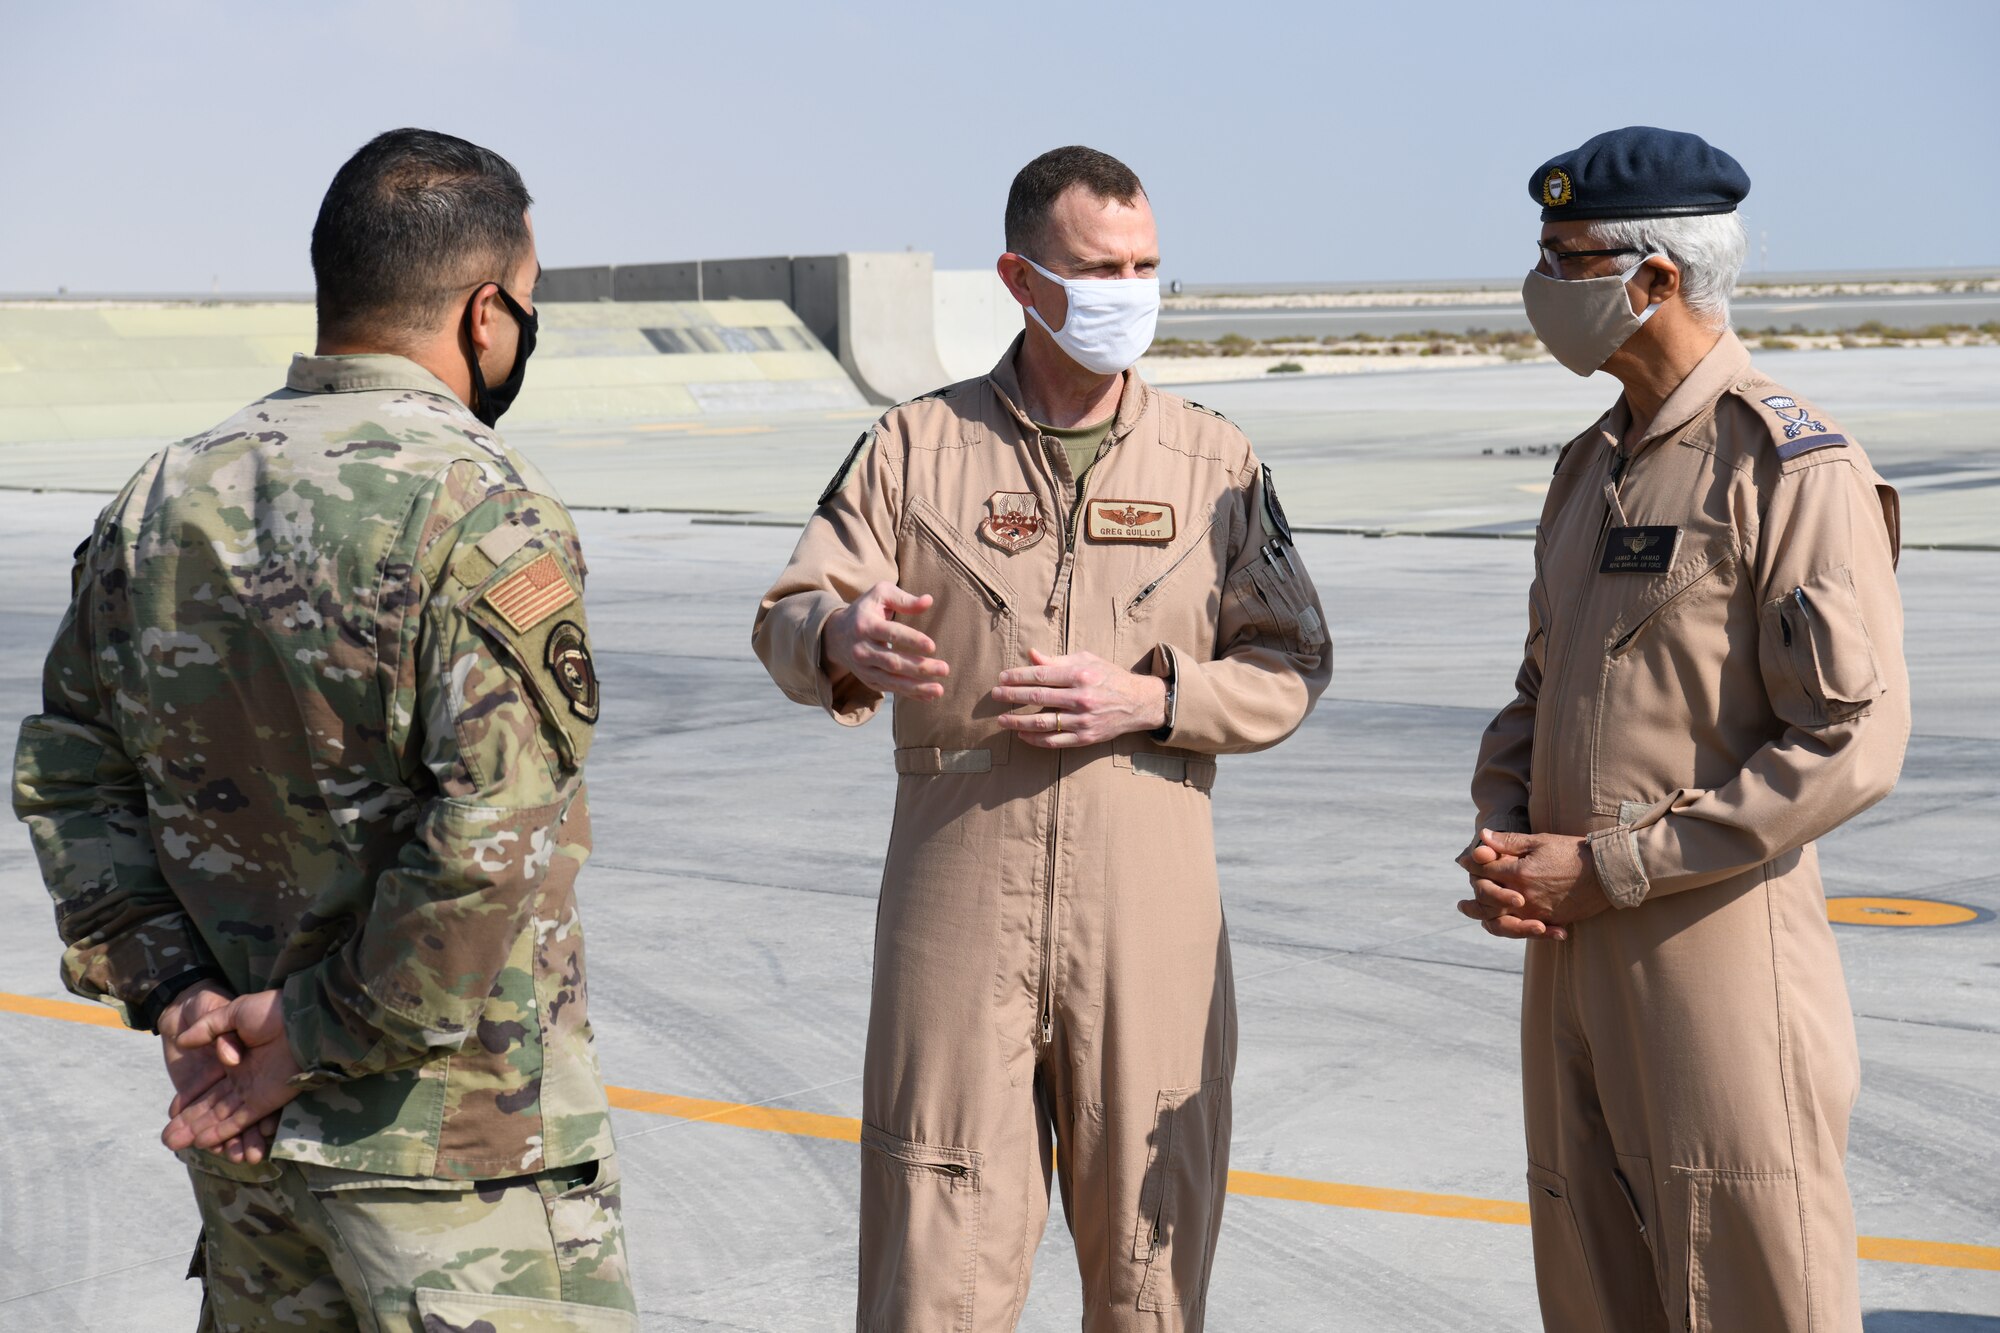 USAF, RBAF bolster resolute partnership